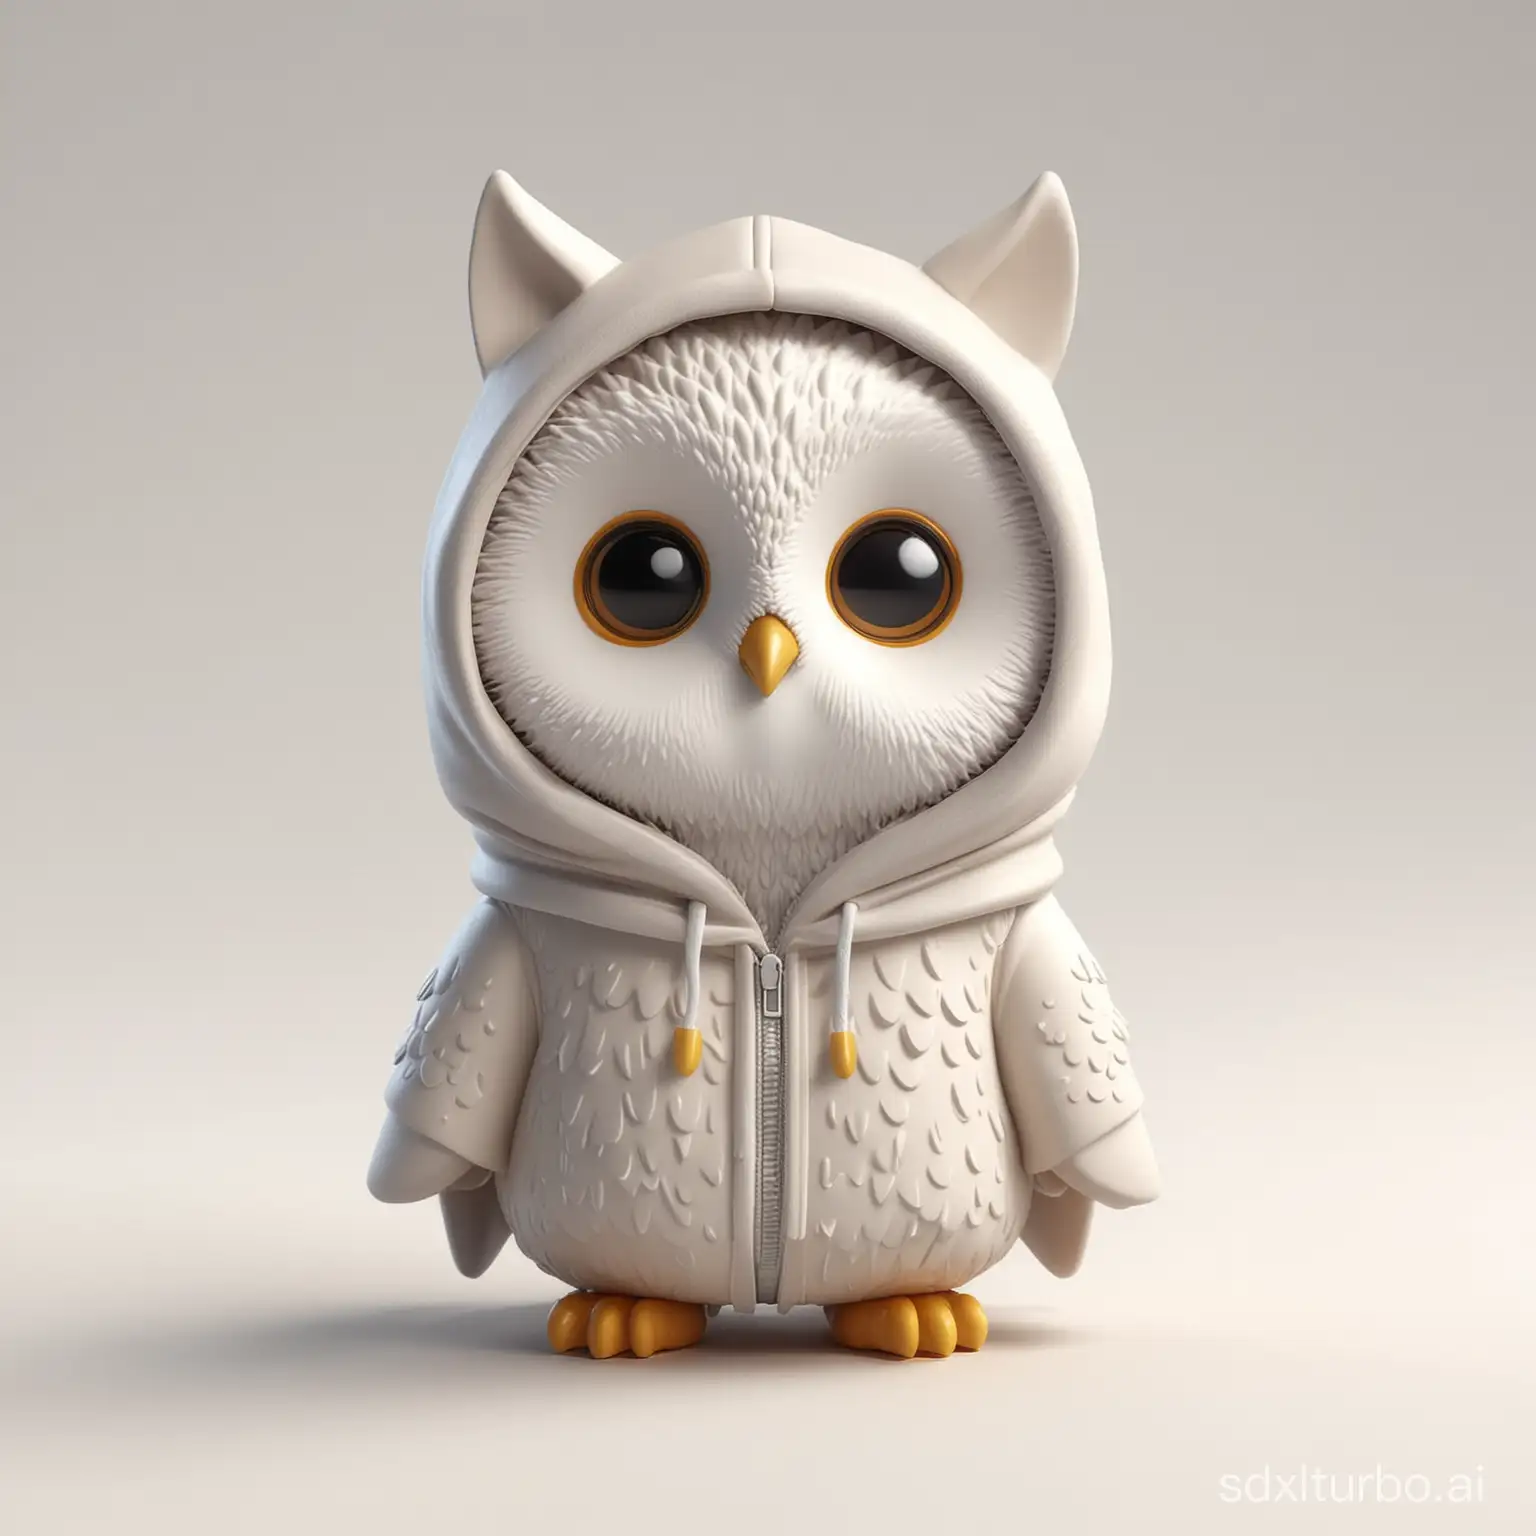 Chibi-Owl-Vinyl-Toy-3D-Character-in-Minimalist-Isometric-Render-Hoodie-Costume